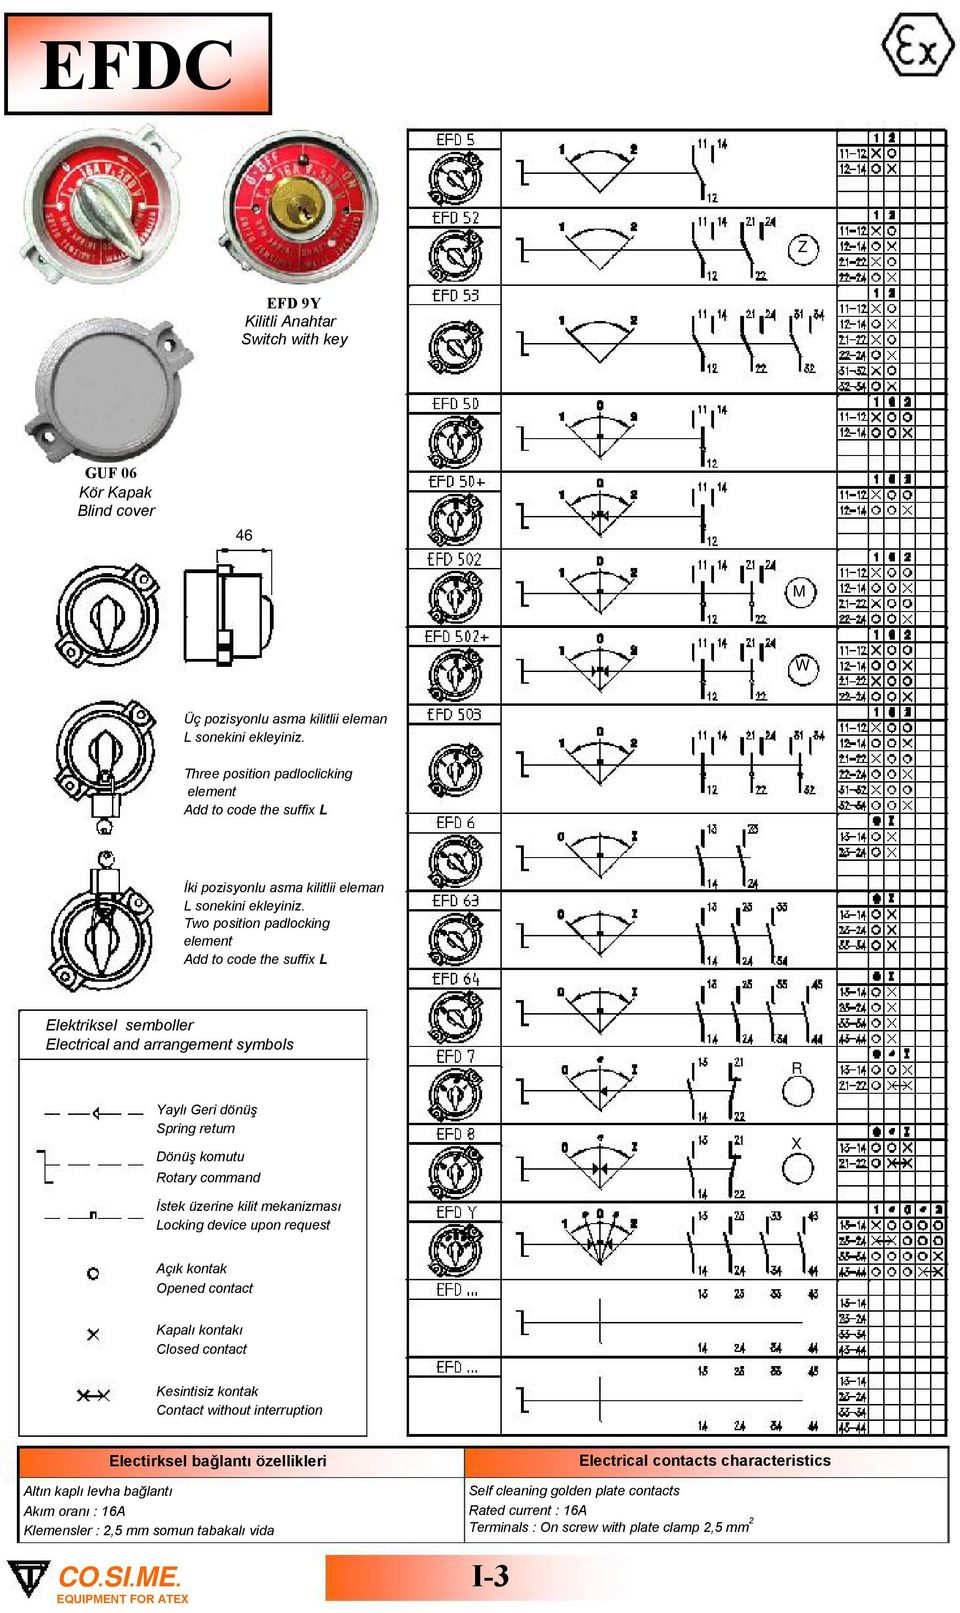 Two position padlocking element Add to code the suffix L Elektriksel semboller Electrical and arrangement symbols R Yaylı Geri dönüş Spring return Dönüş komutu Rotary command X İstek üzerine kilit